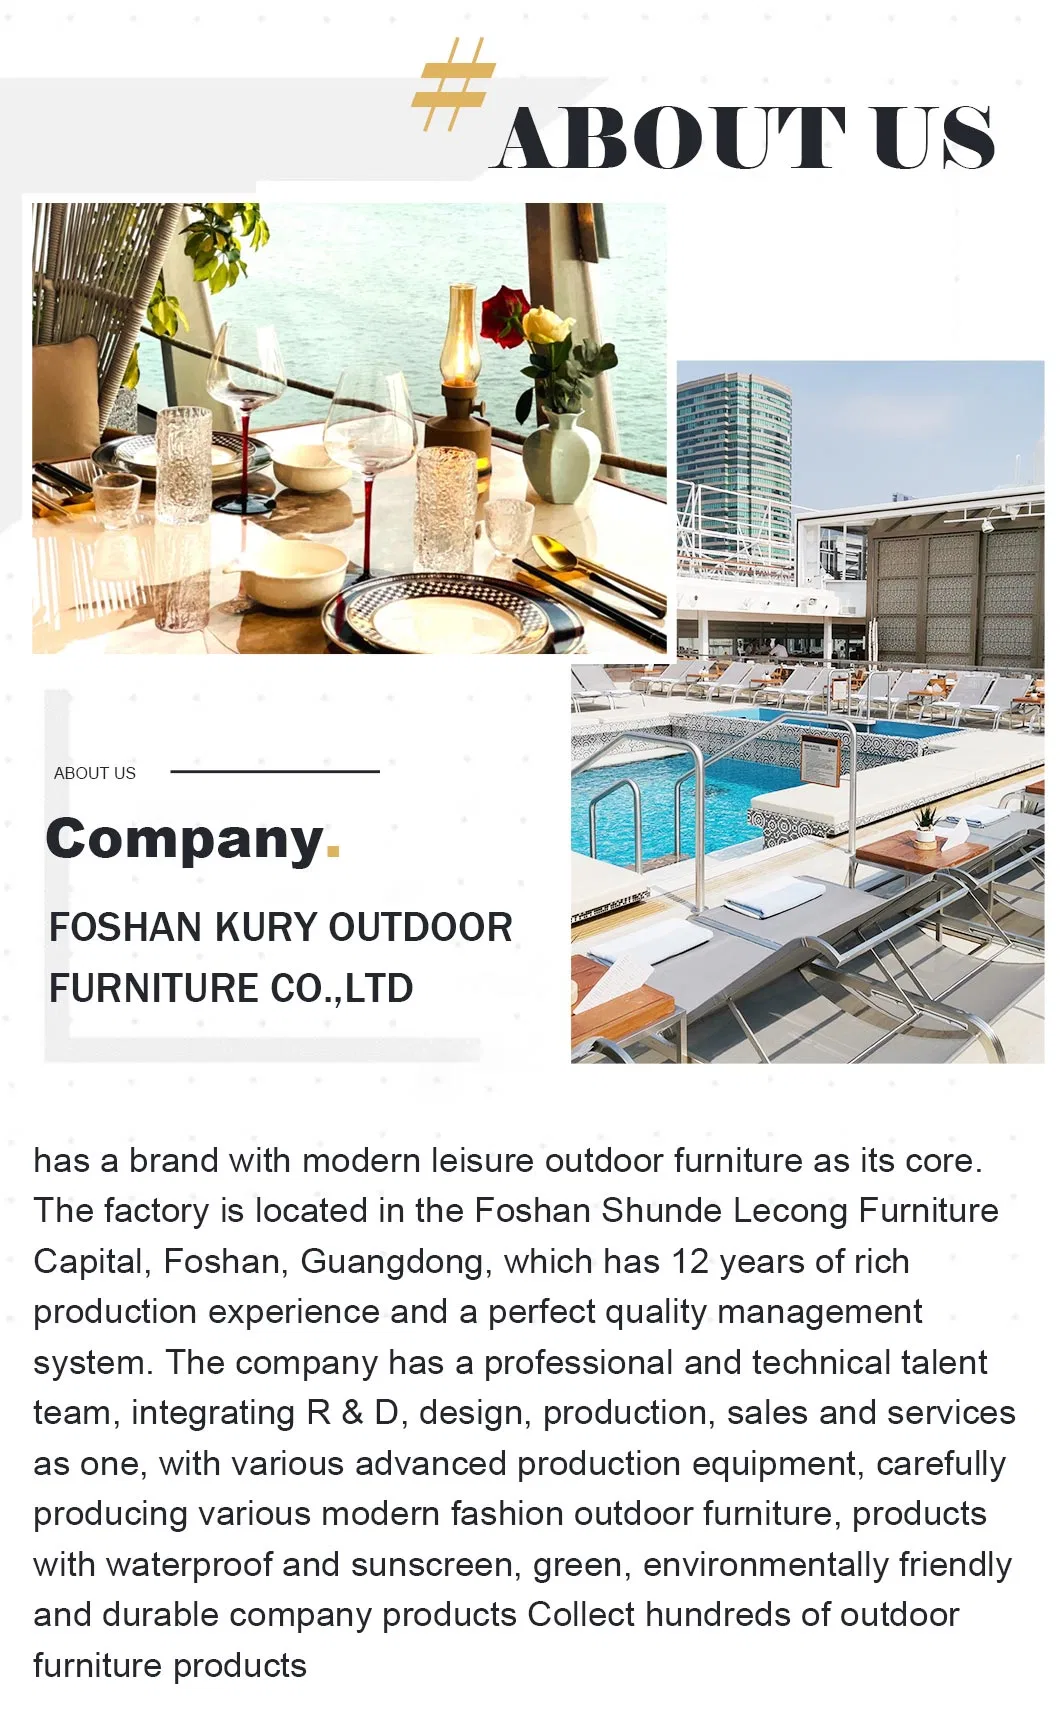 Modern Design Outdoor Wicker Patio Furniture Rattan Couch Lounge Garden Sofa Set